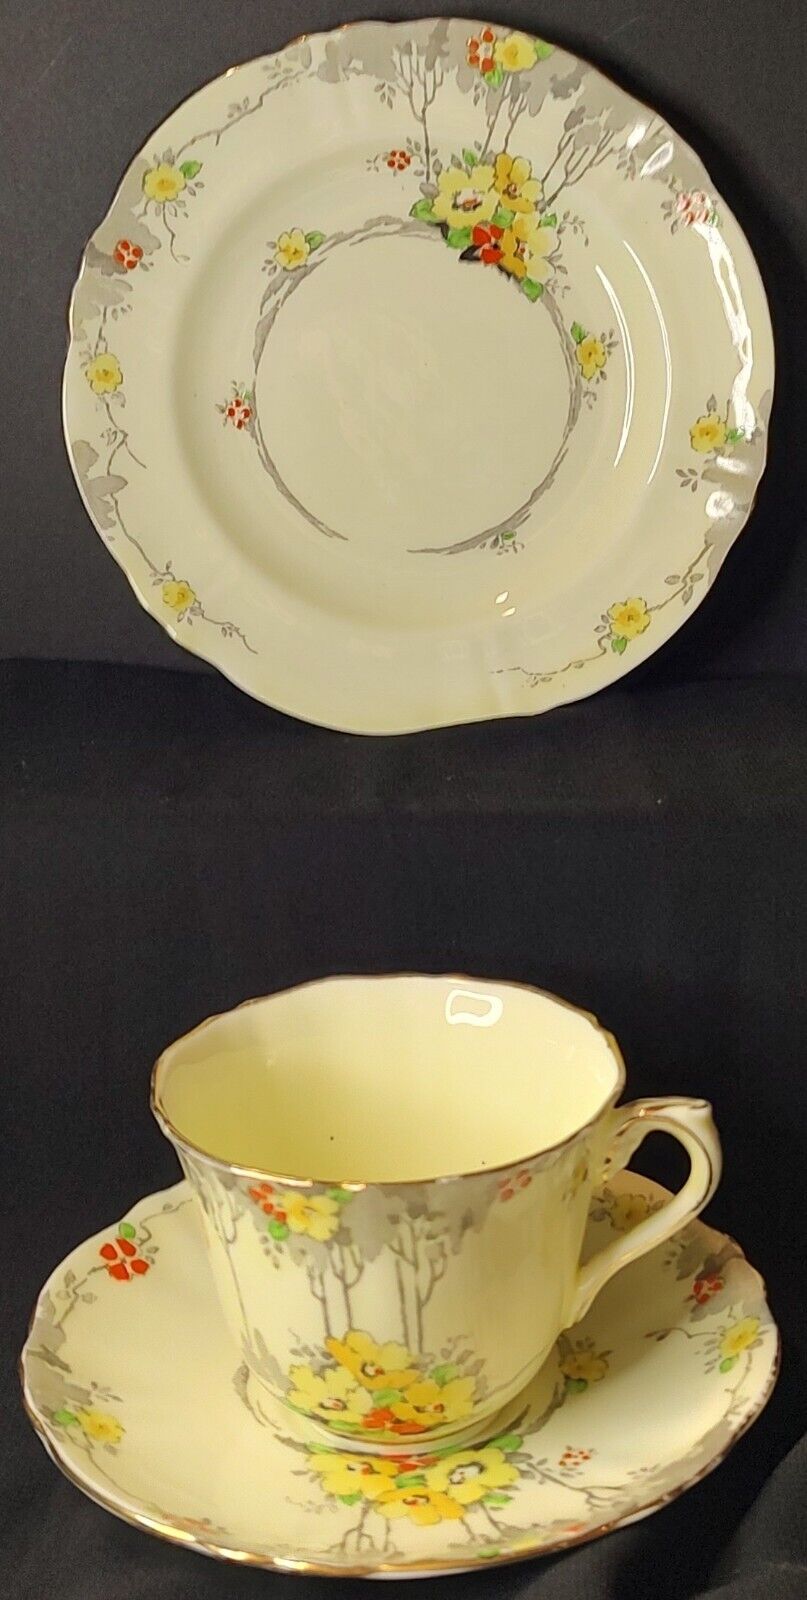 Vintage English Crown Staffordshire Porcelain Teacup Saucer and Plate 